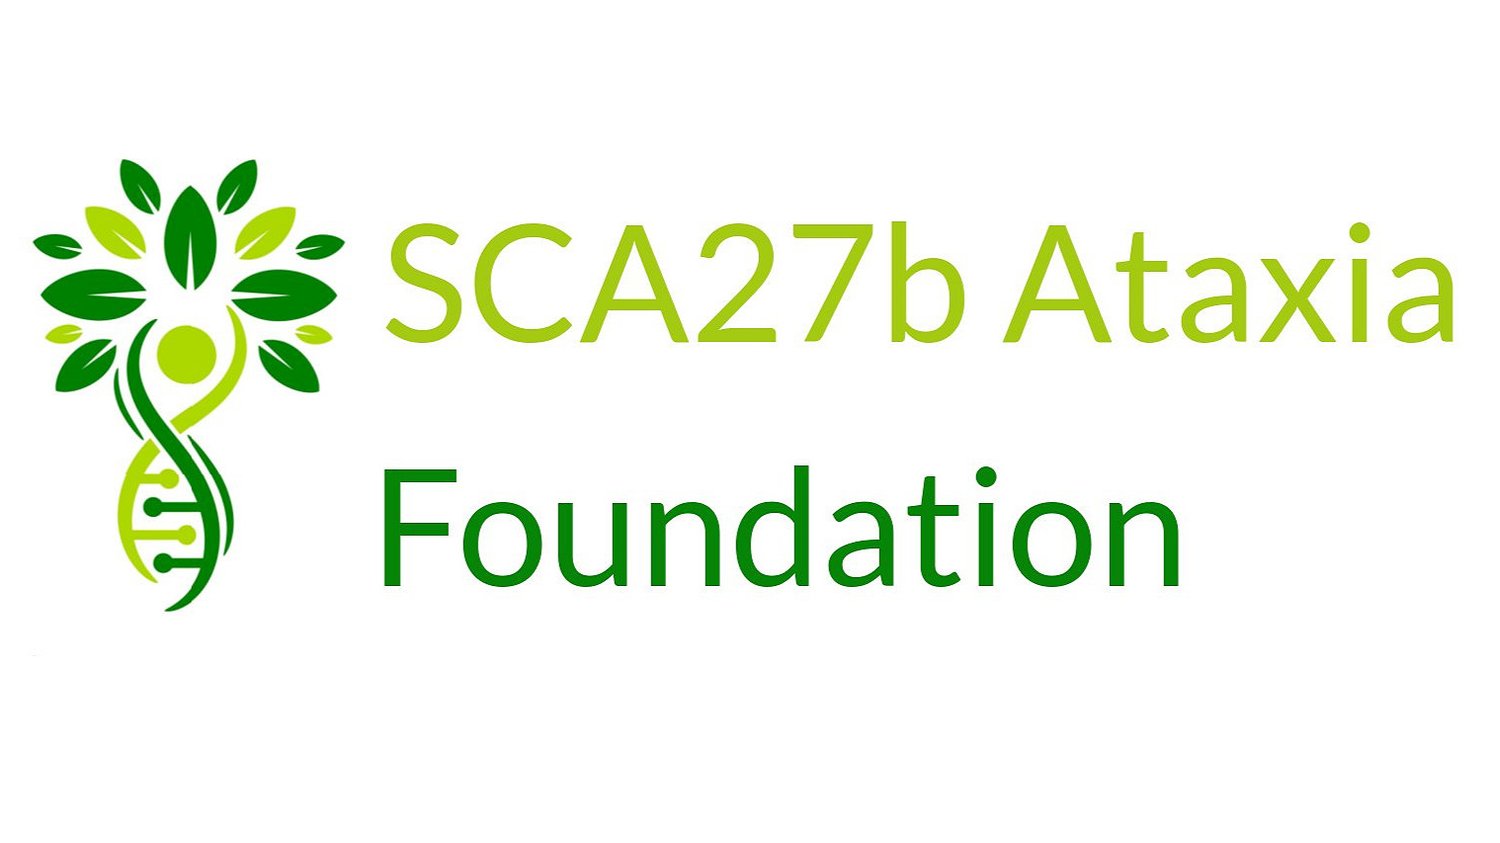 SCA27b Ataxia Foundation